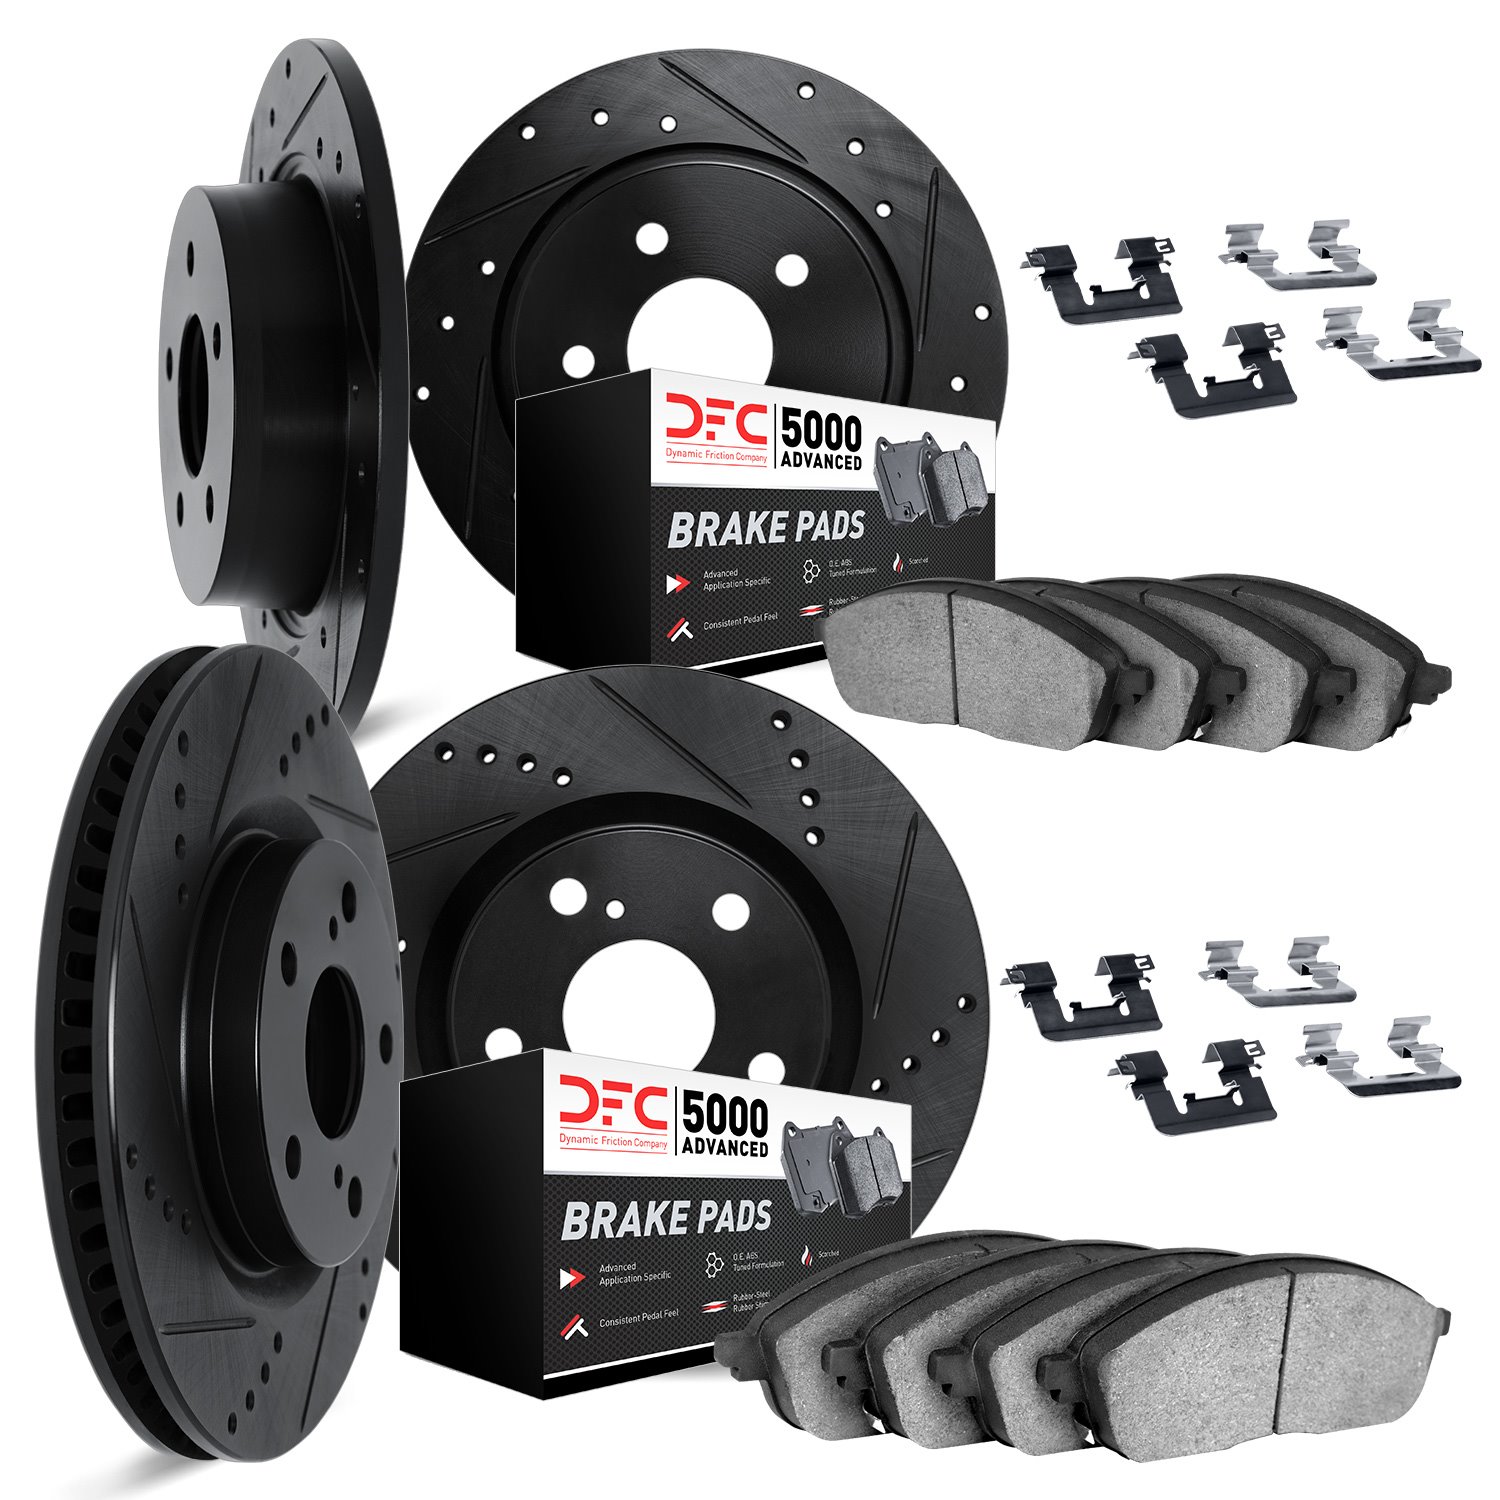 8514-03083 Drilled/Slotted Brake Rotors w/5000 Advanced Brake Pads Kit & Hardware [Black], Fits Select Kia/Hyundai/Genesis, Posi